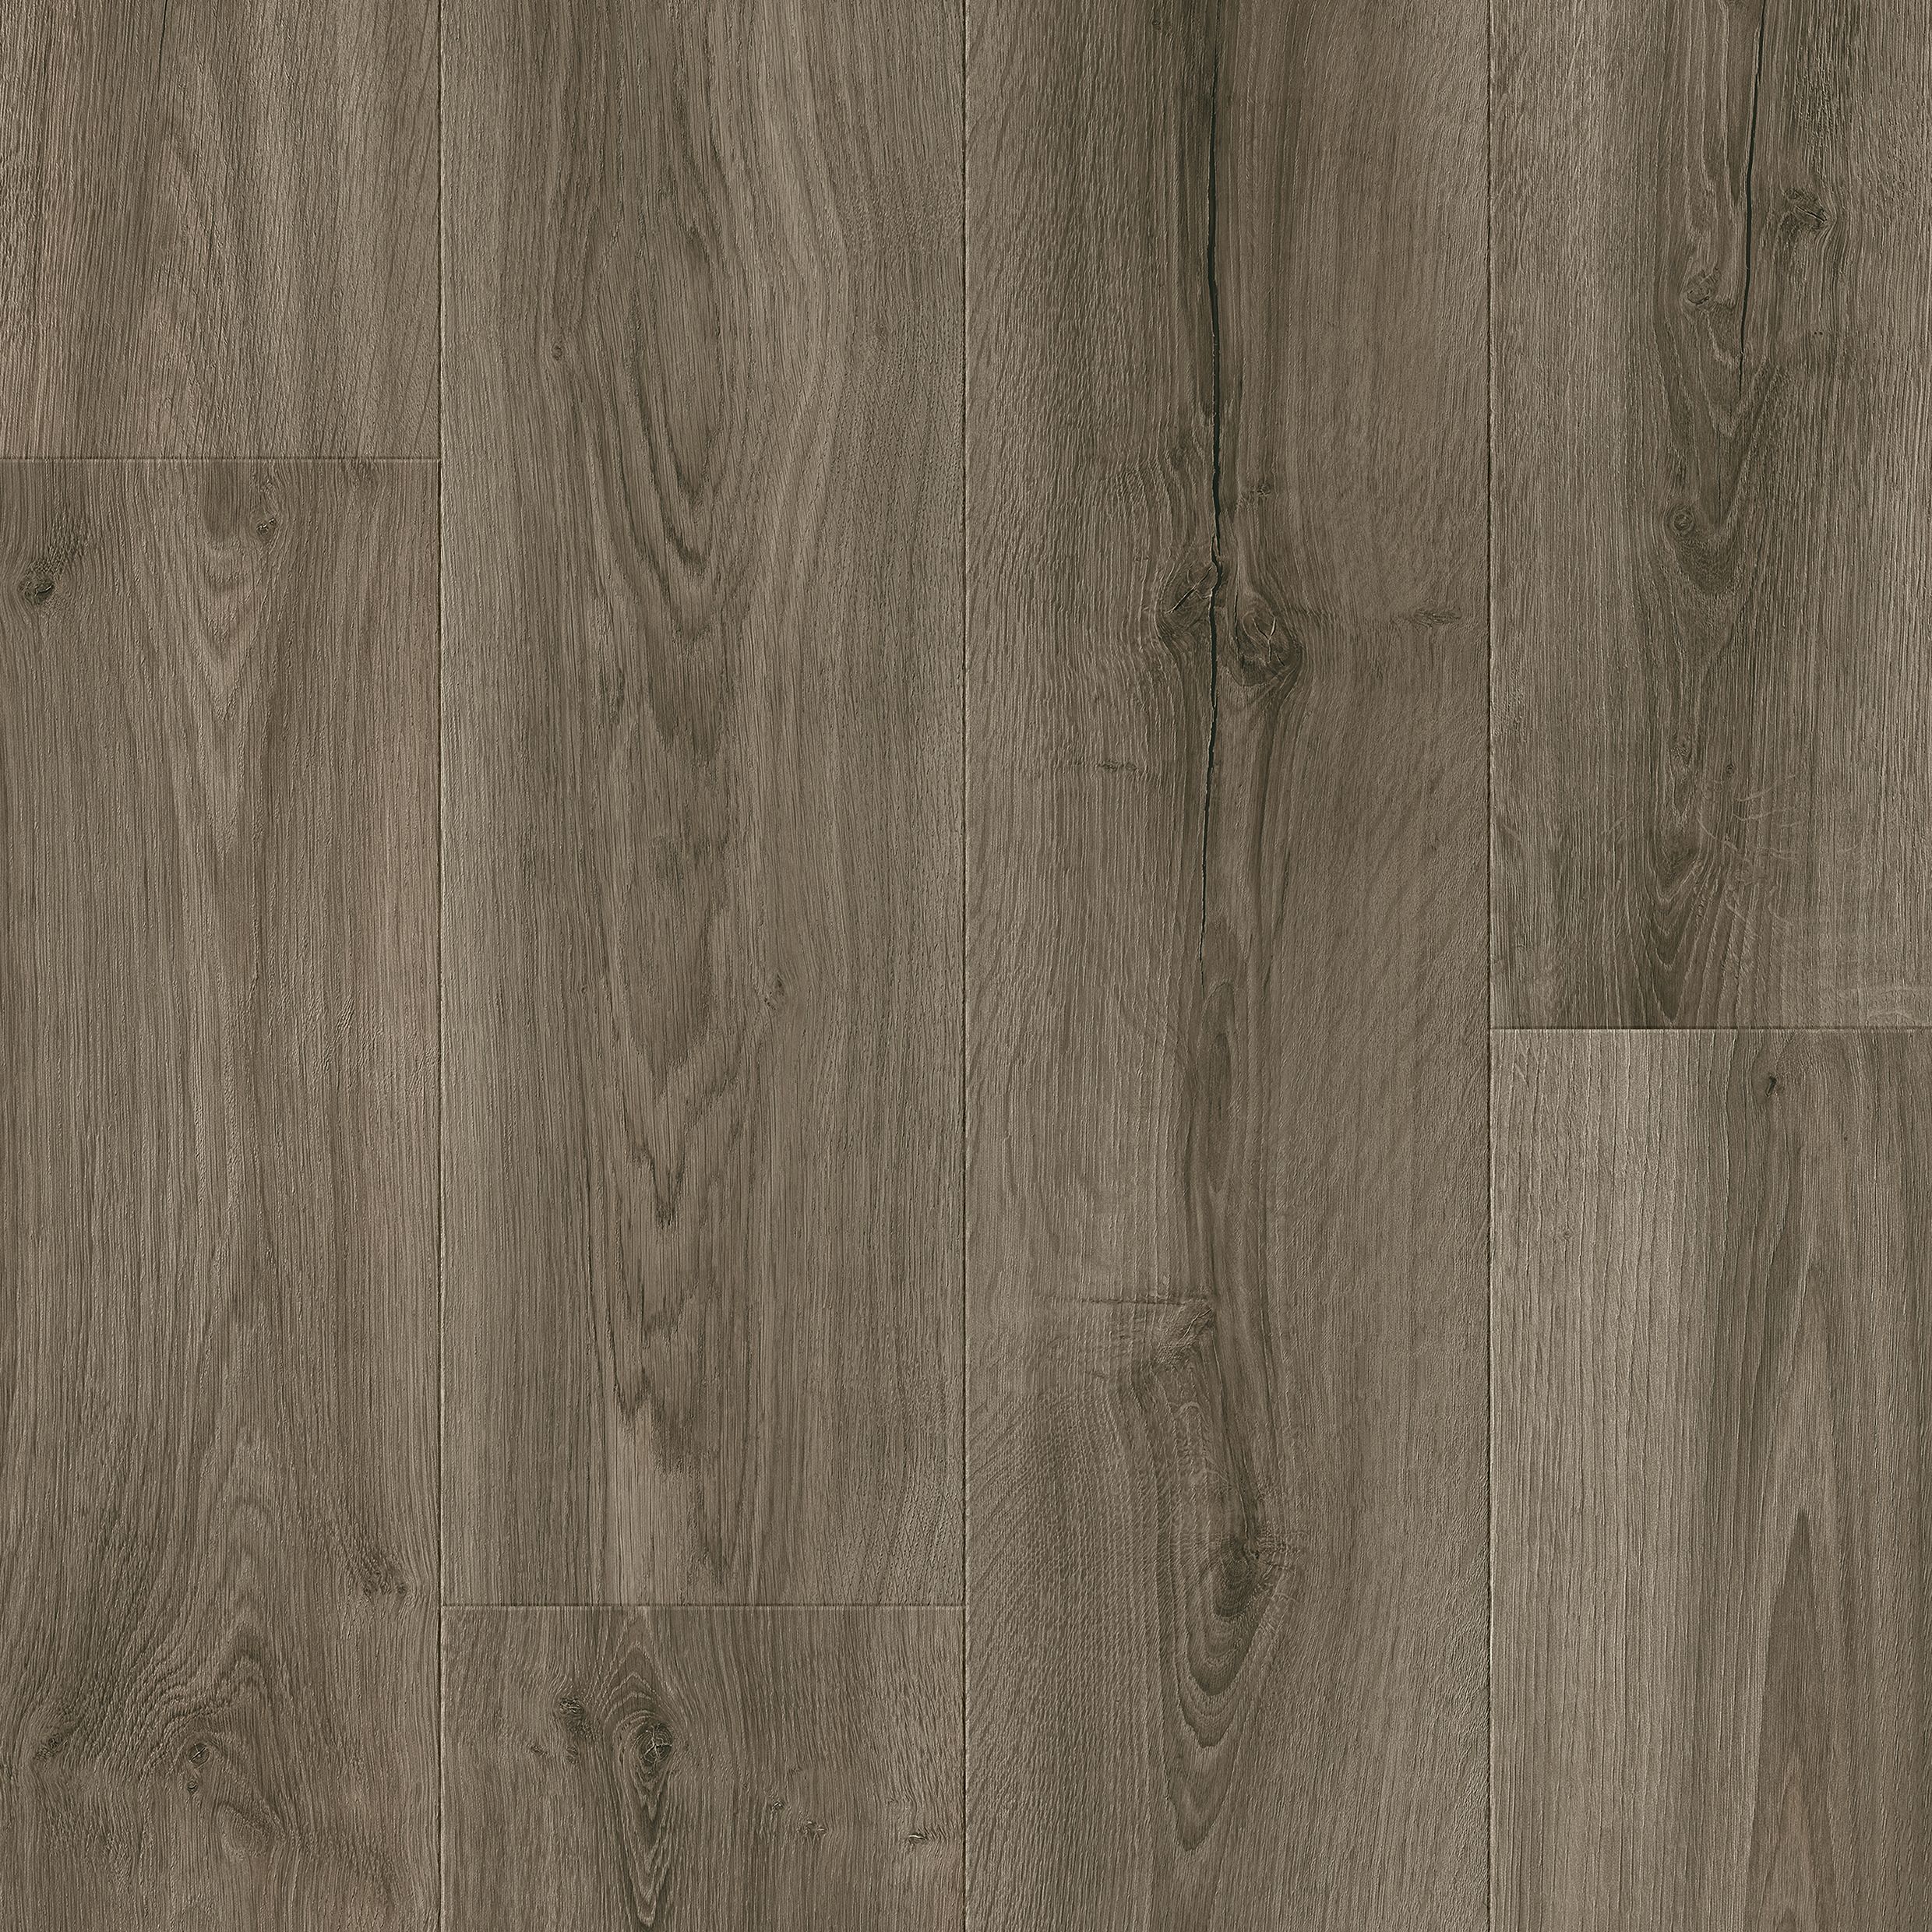 GoodHome Cleobury Brown Oak effect Laminate Flooring, 1.69m²